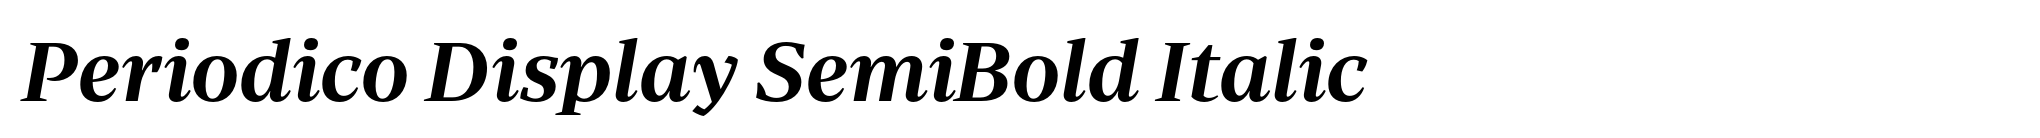 Periodico Display SemiBold Italic image